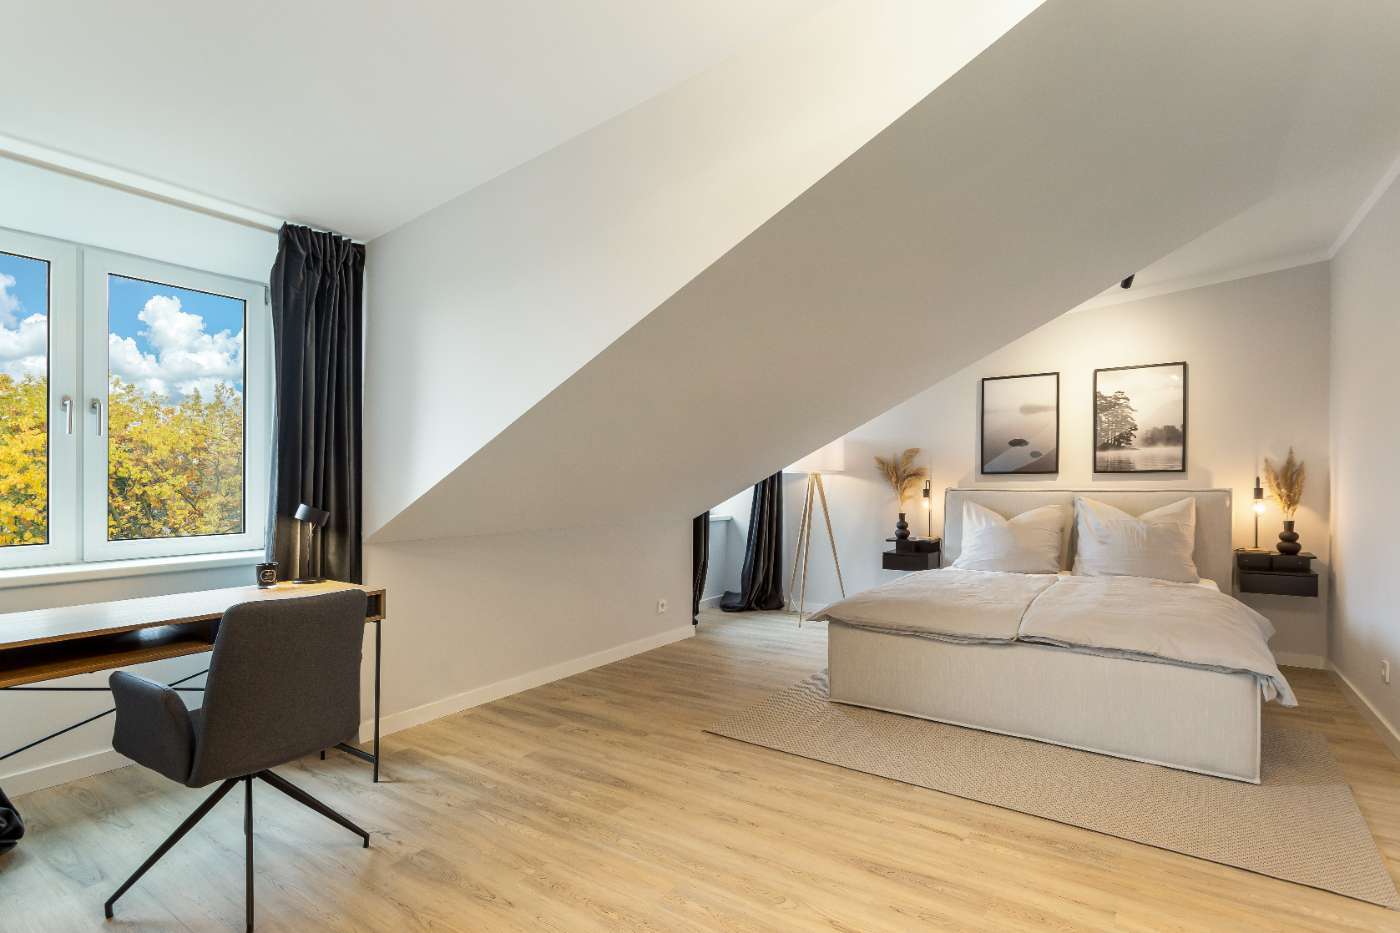 Wohnung zum Mieten in Pinneberg 1.998,00 € 66 m²